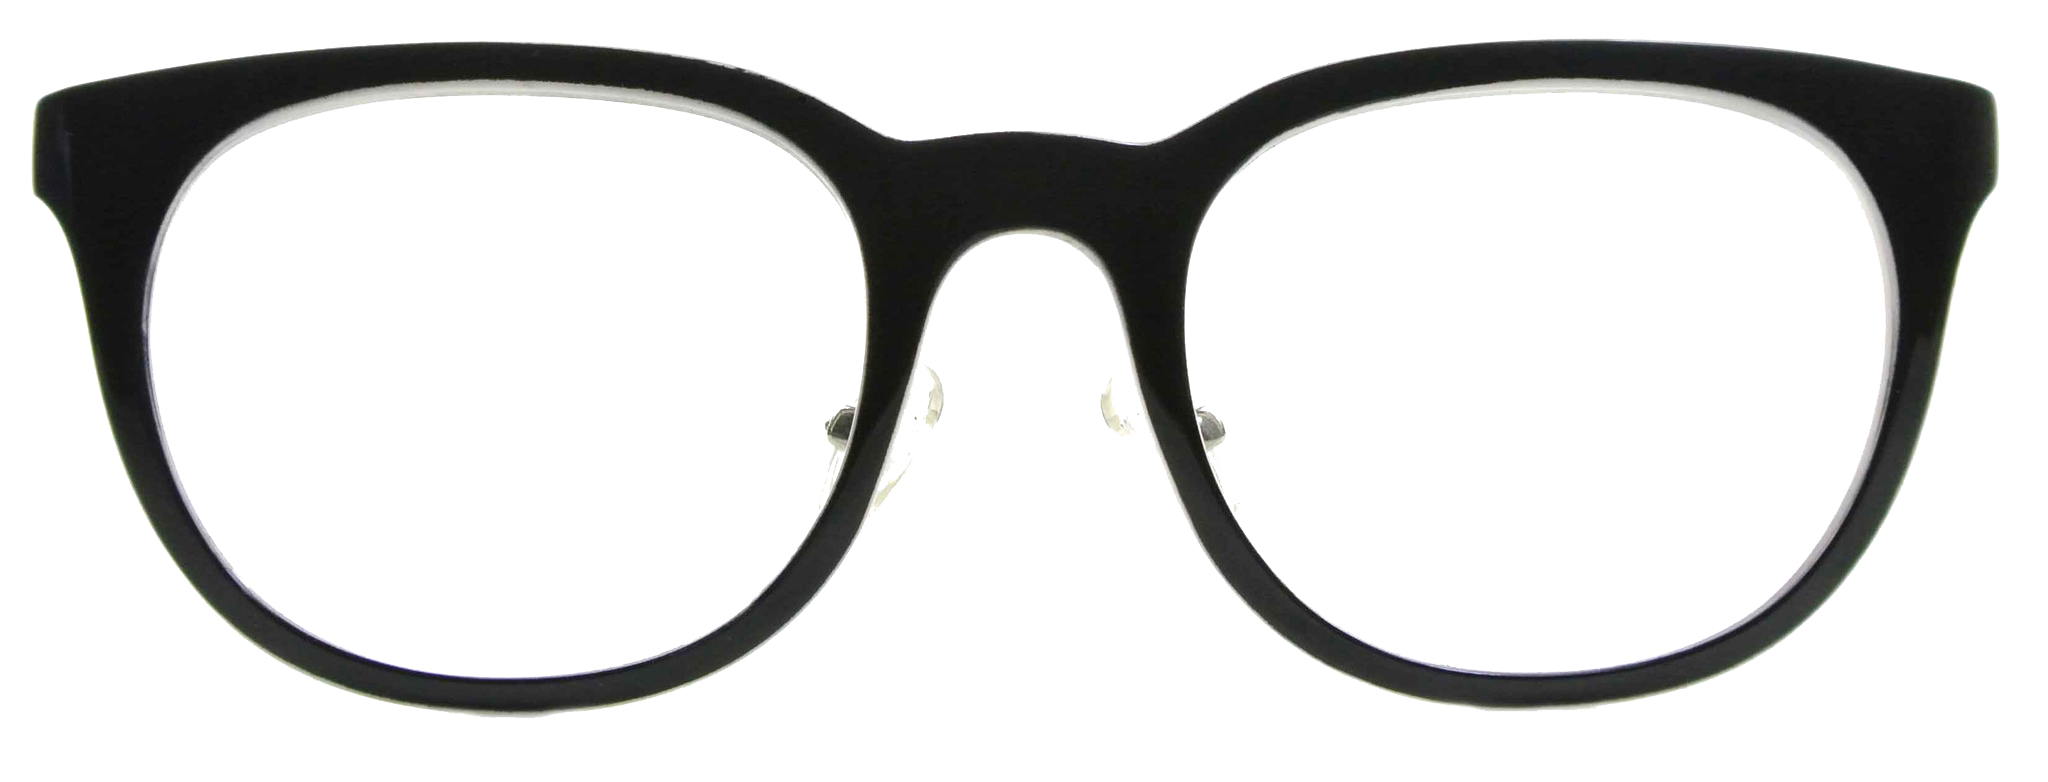 Glasses Png Transparent